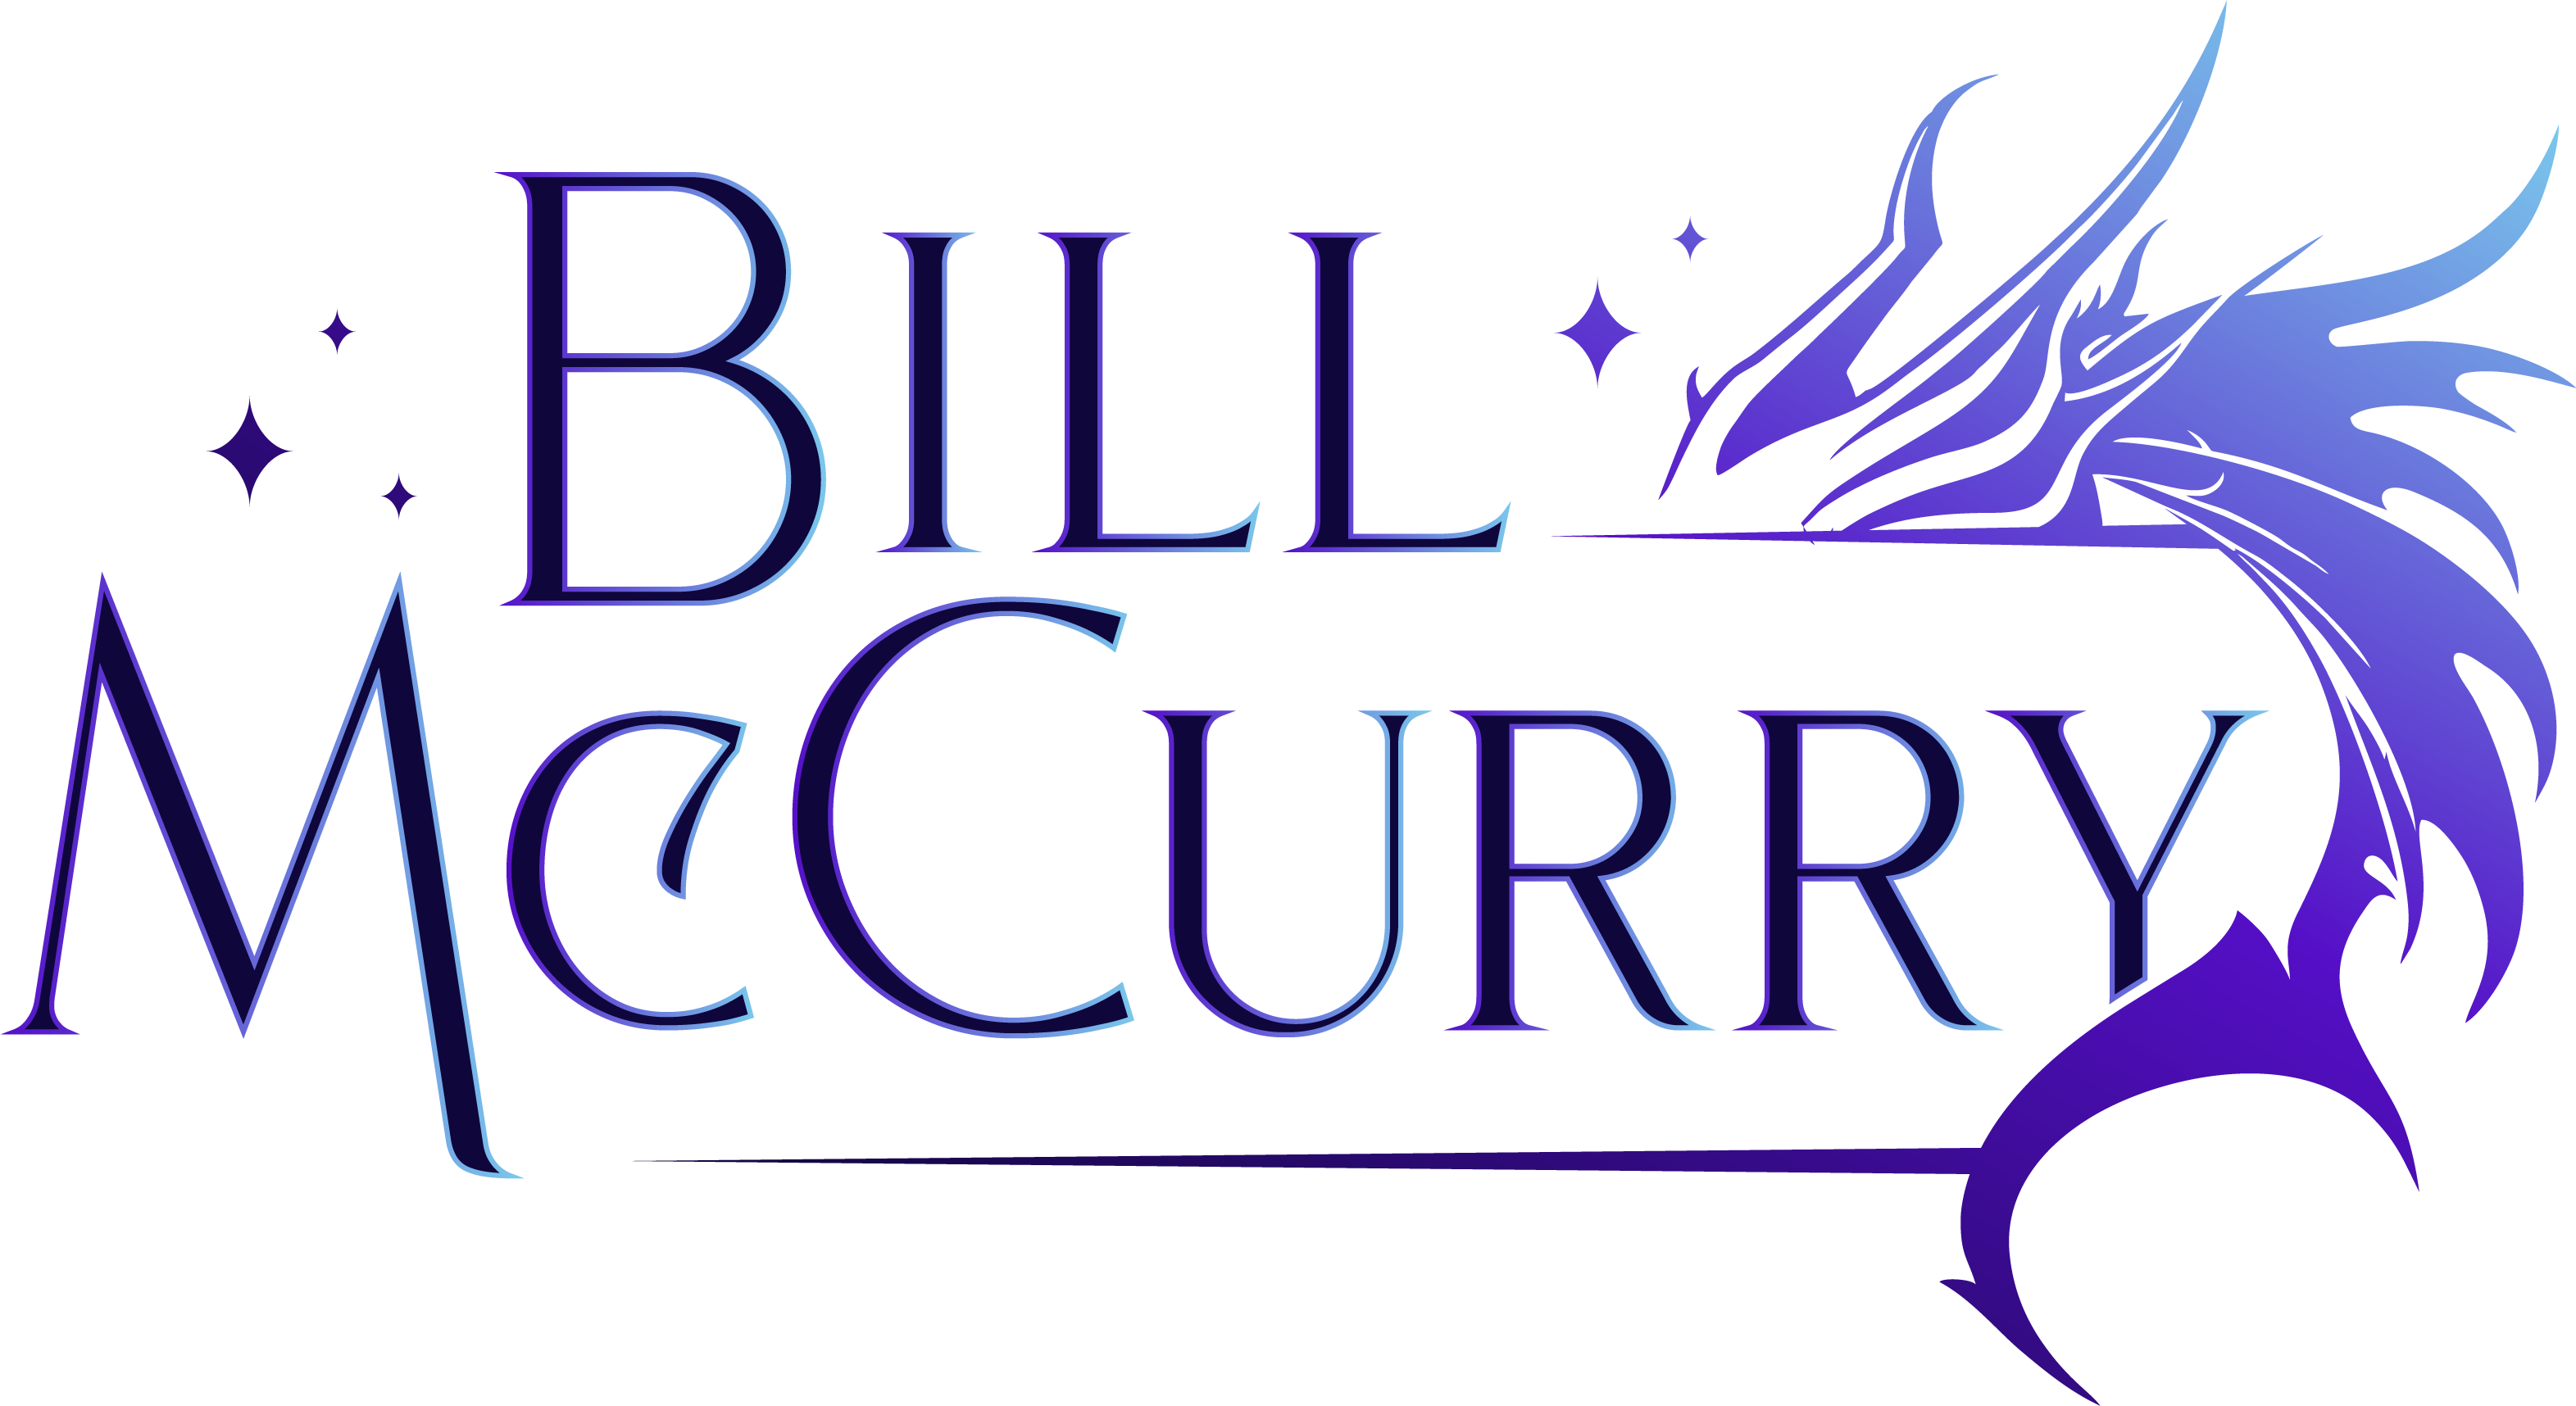 BILL McCURRY – Bill McCurry